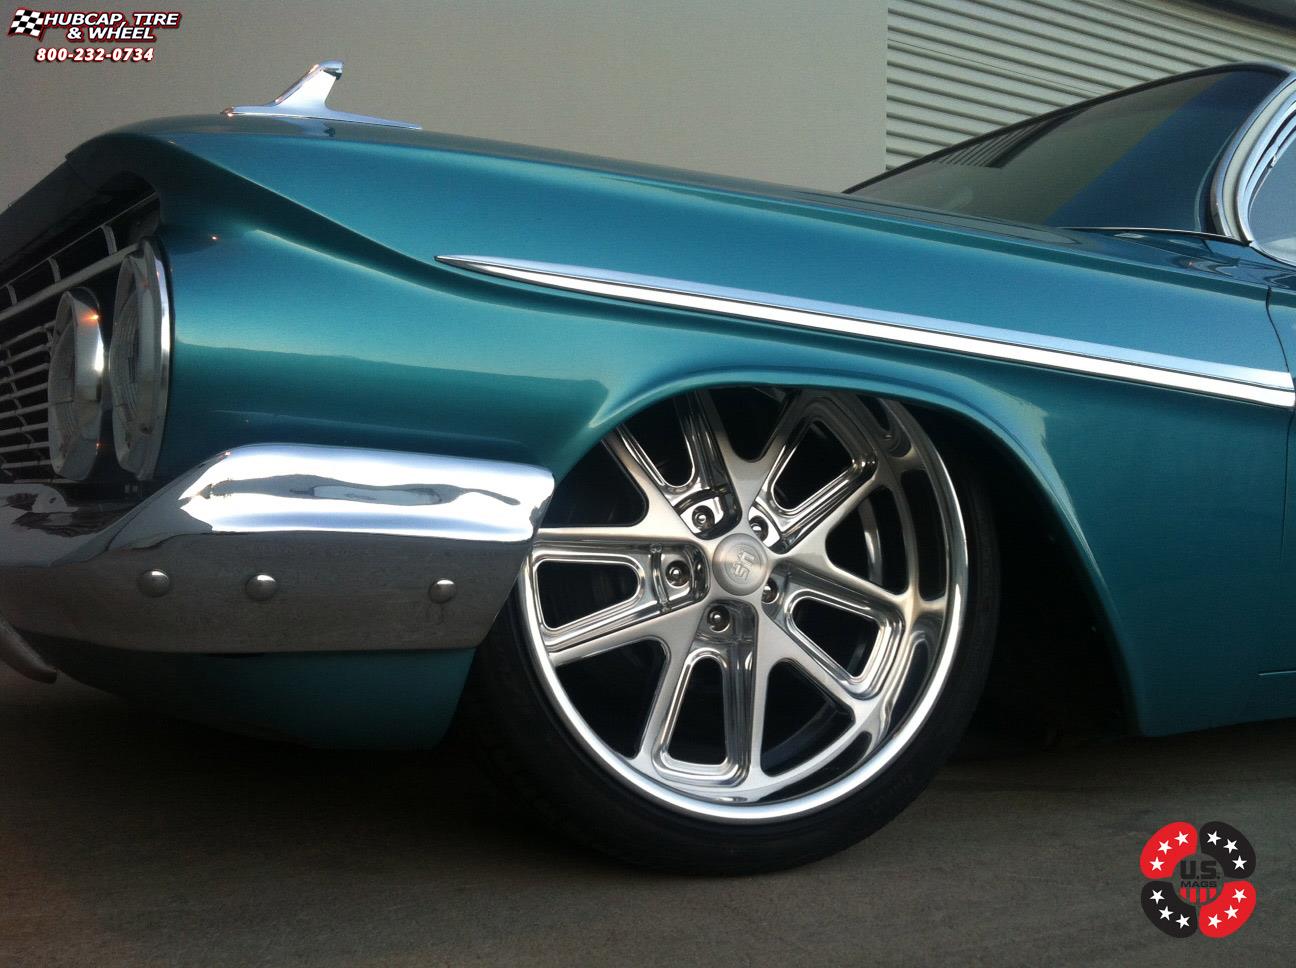 vehicle gallery/chevrolet impala us mags m one u424 20X9  Brushed w/ Polished Windows wheels and rims